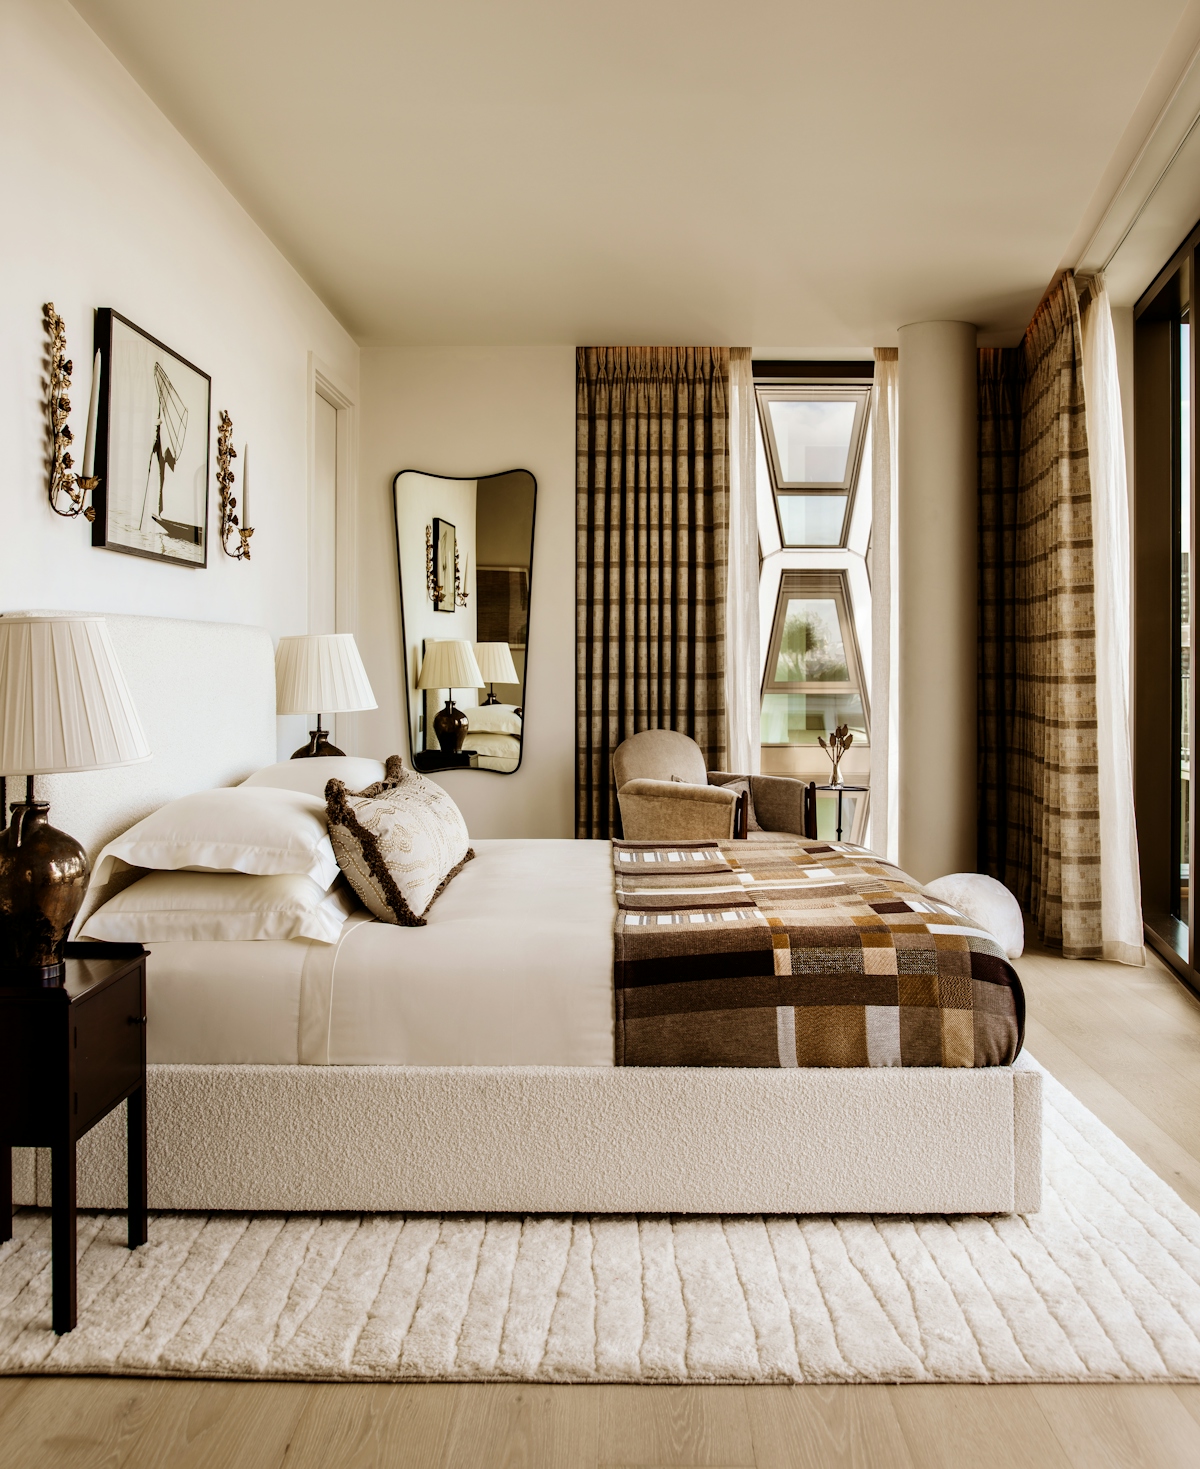 9 Ways to Decorate & Fill Empty Bedroom Corners - Awkward Bedroom Corners - Elicyon - LuxDeco.com